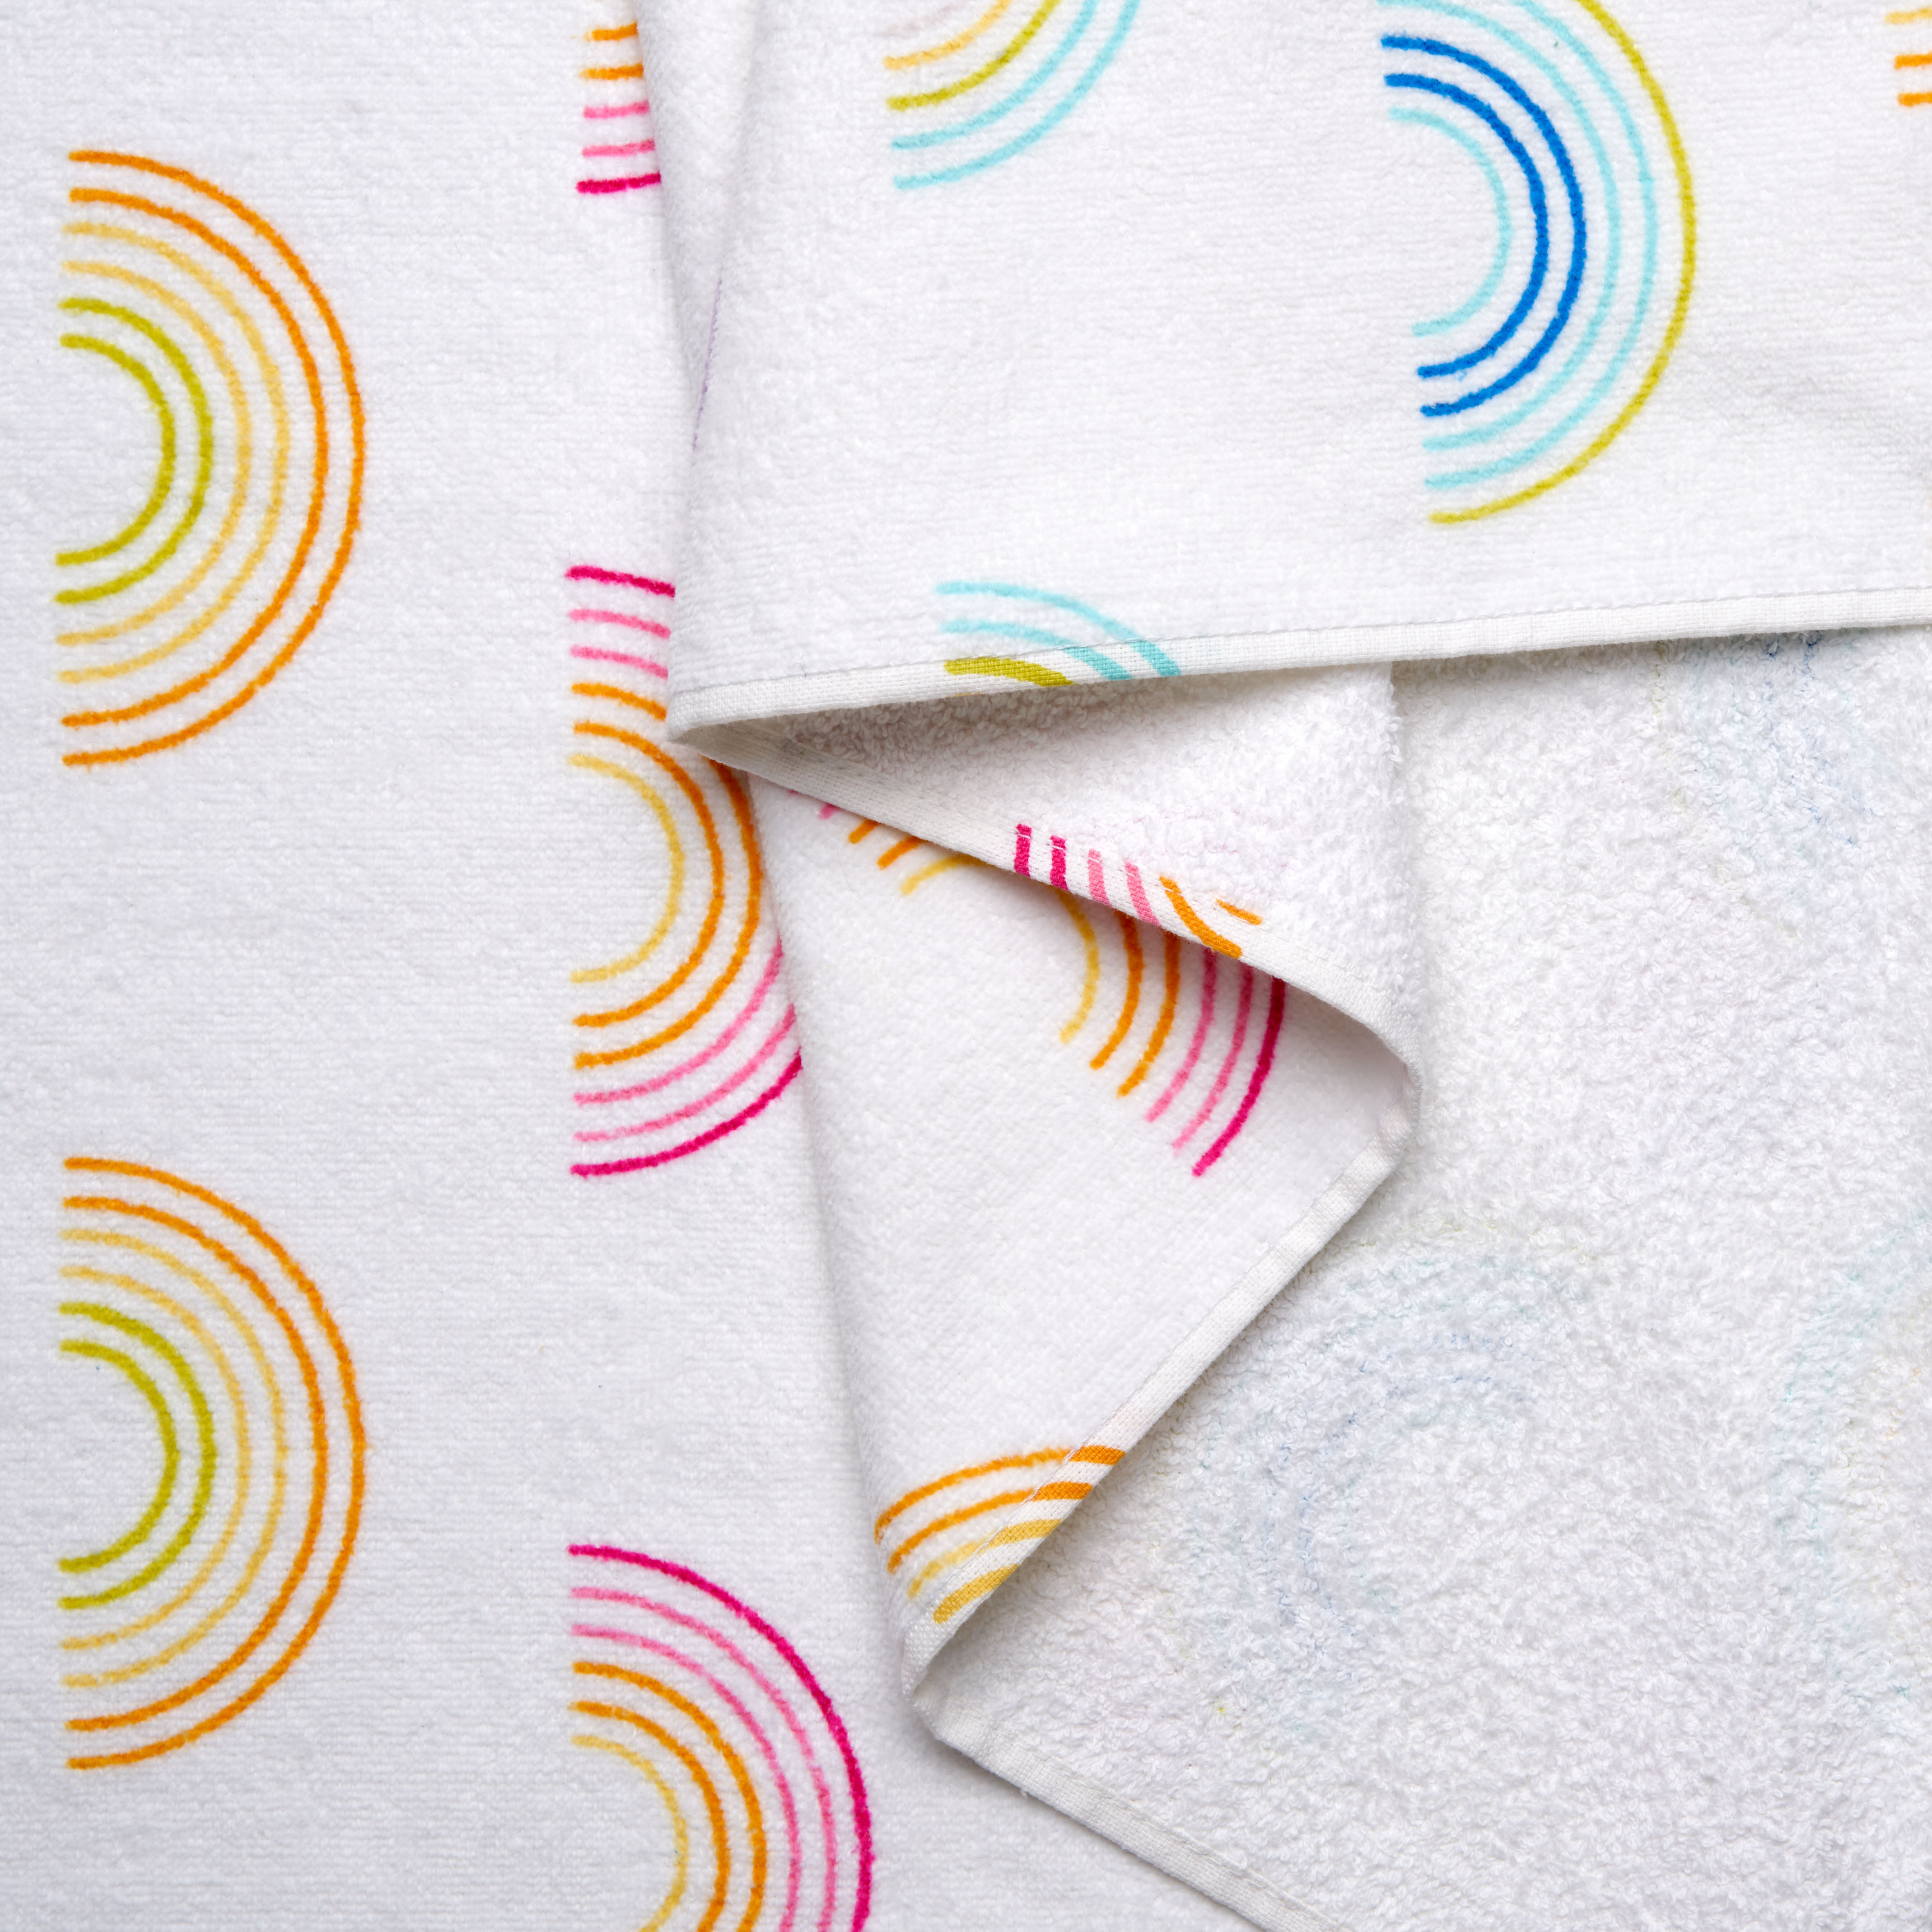 Gap Home Kids Rainbow Toss Organic Cotton 6 Piece Towel Set, White - image 3 of 5